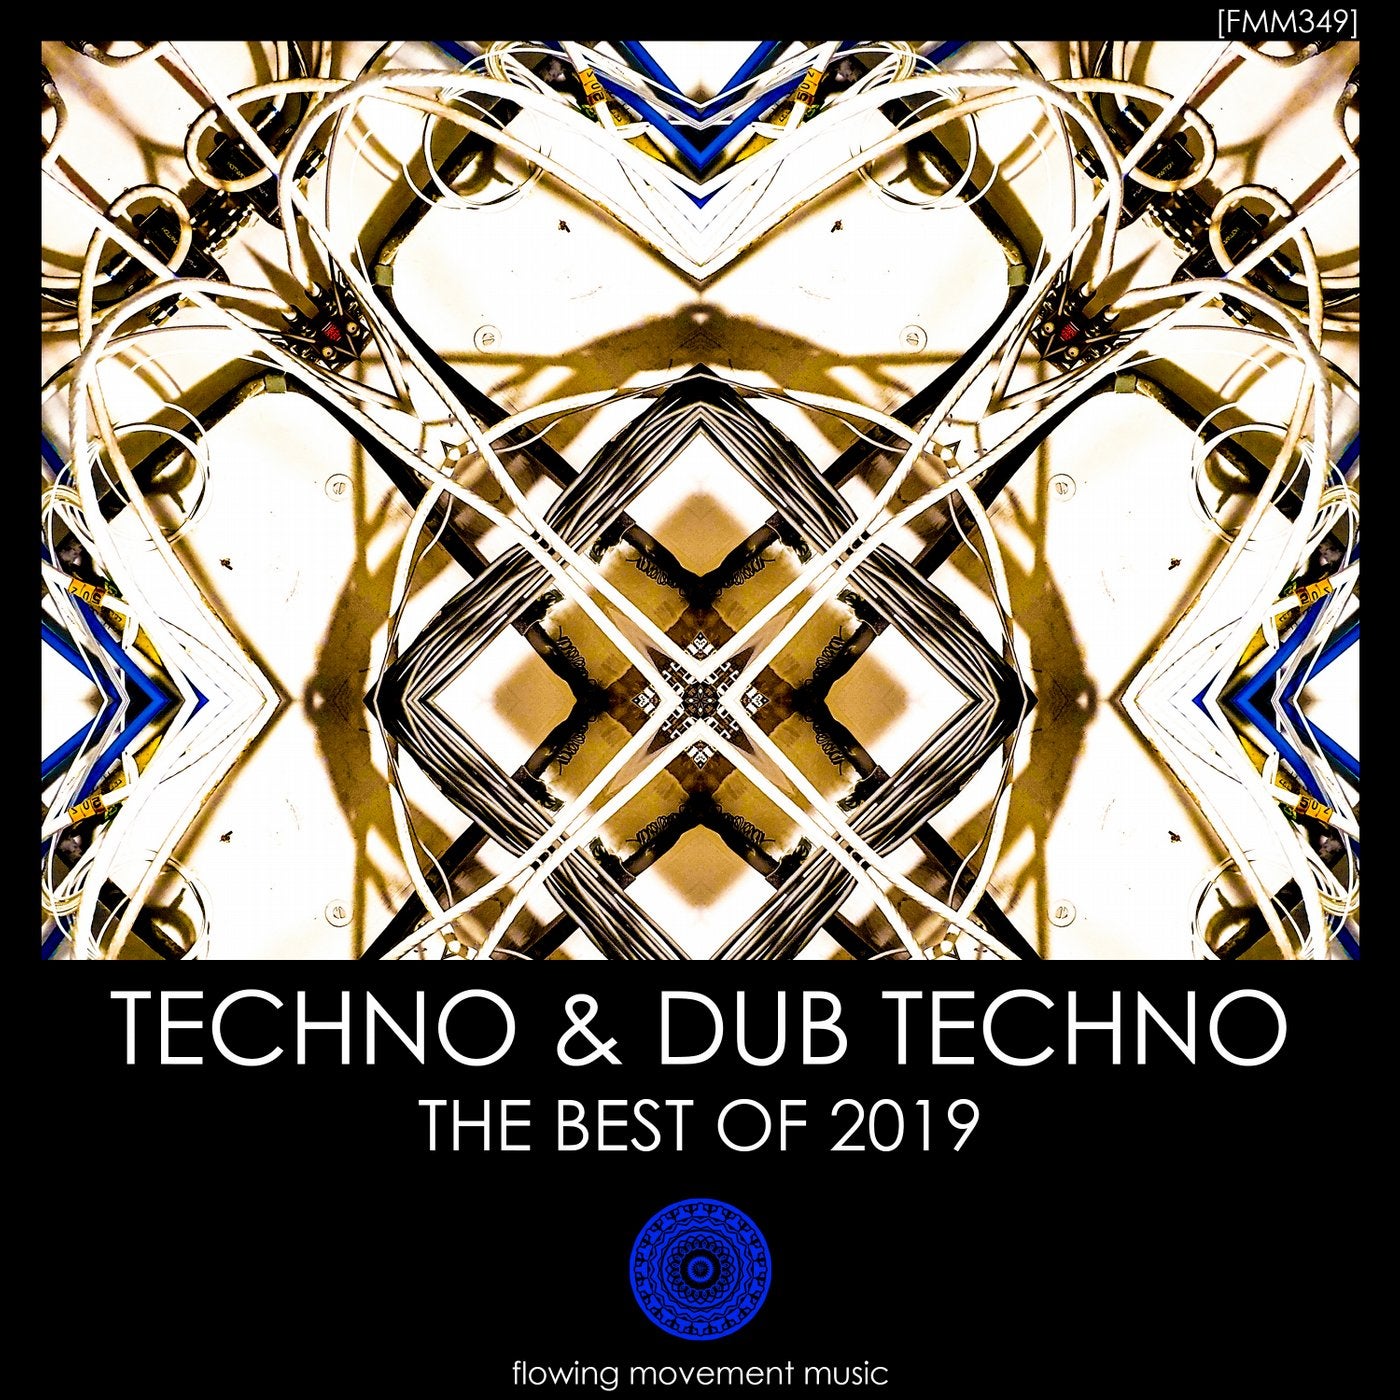 The Best Of 2019, Techno & Dub Techno